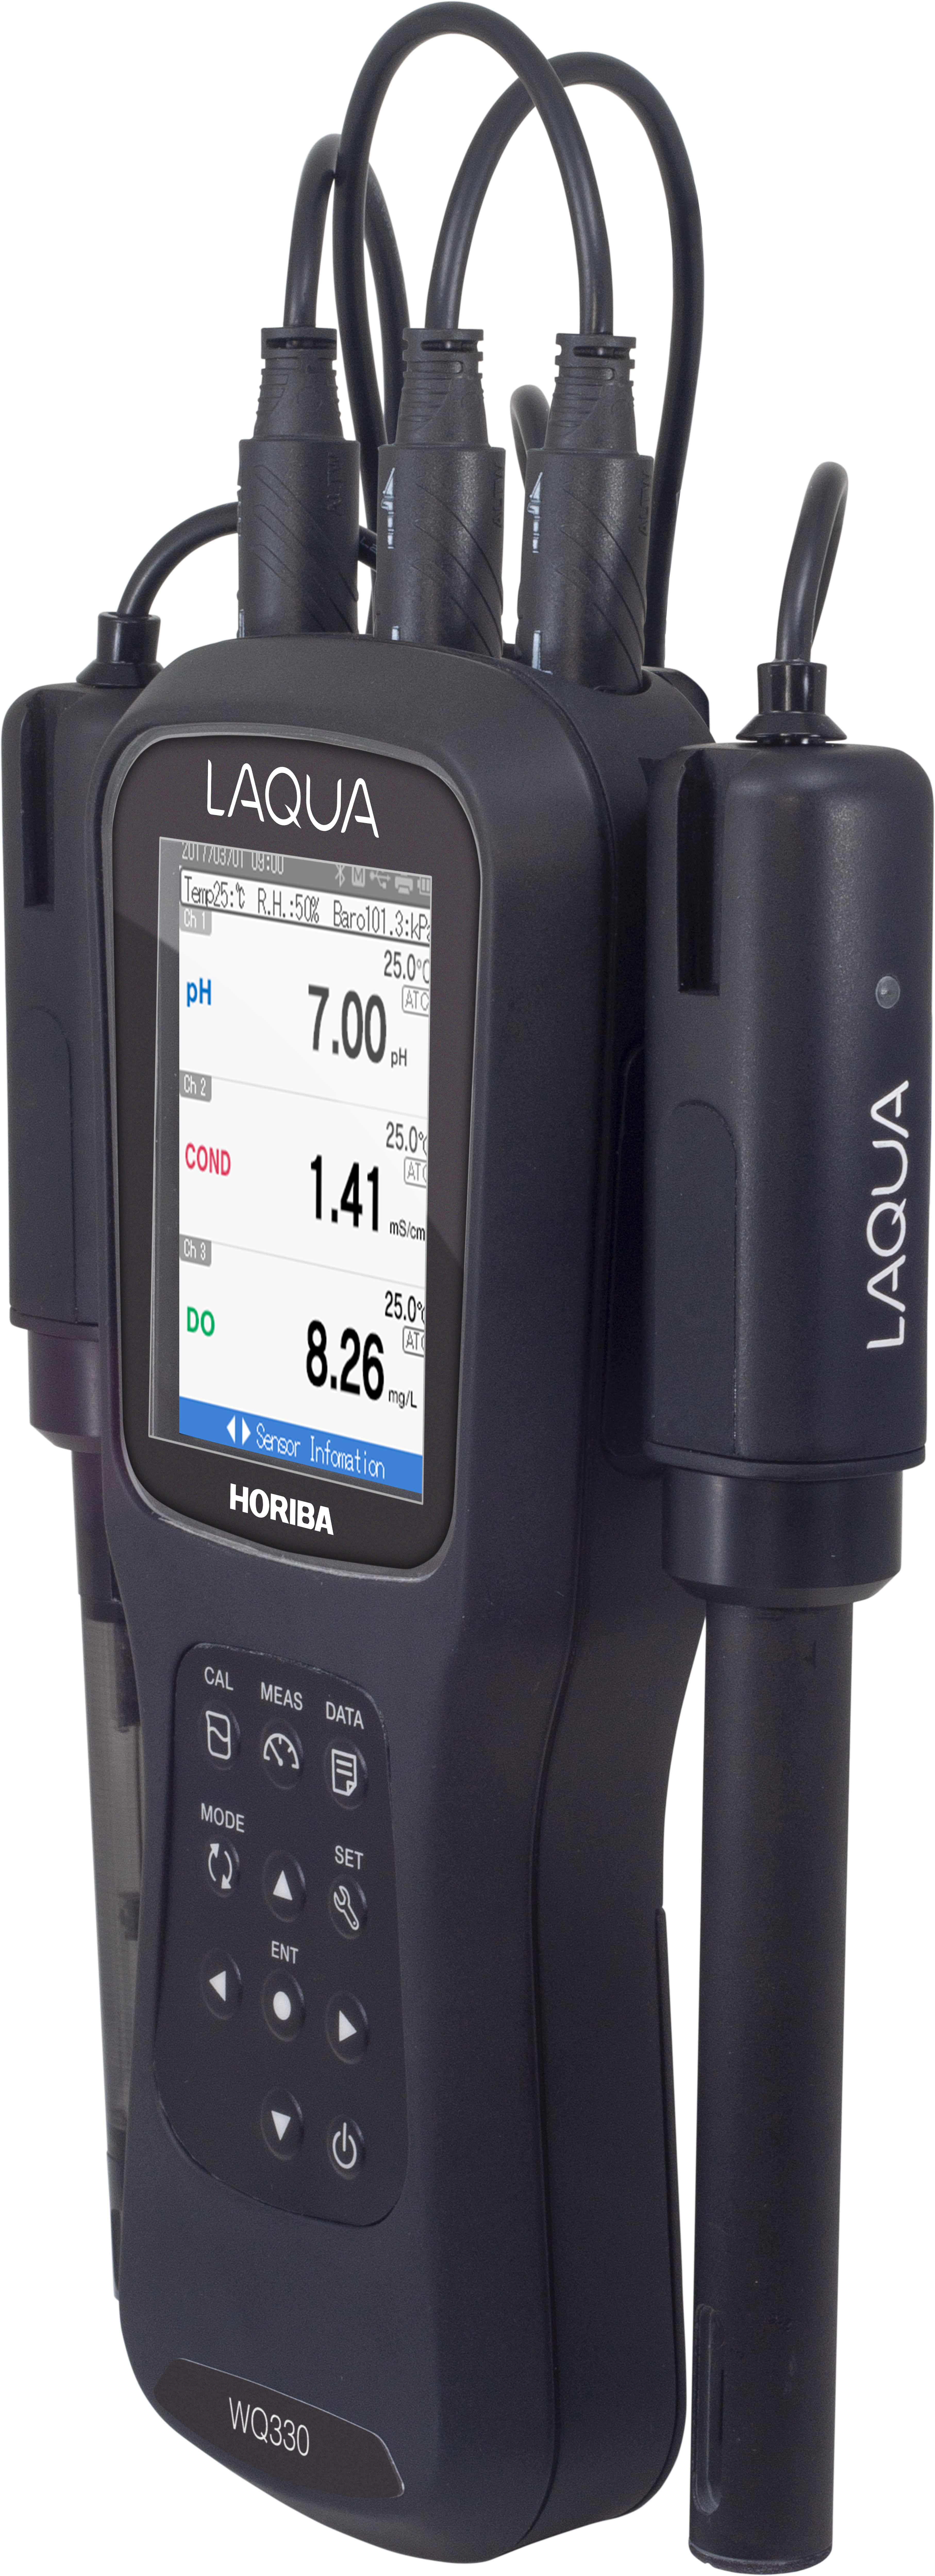 Horiba LAQUA WQ330-K - 3-Kanal Profi-Messgerät für verschiedene Parameter im Analysekoffer